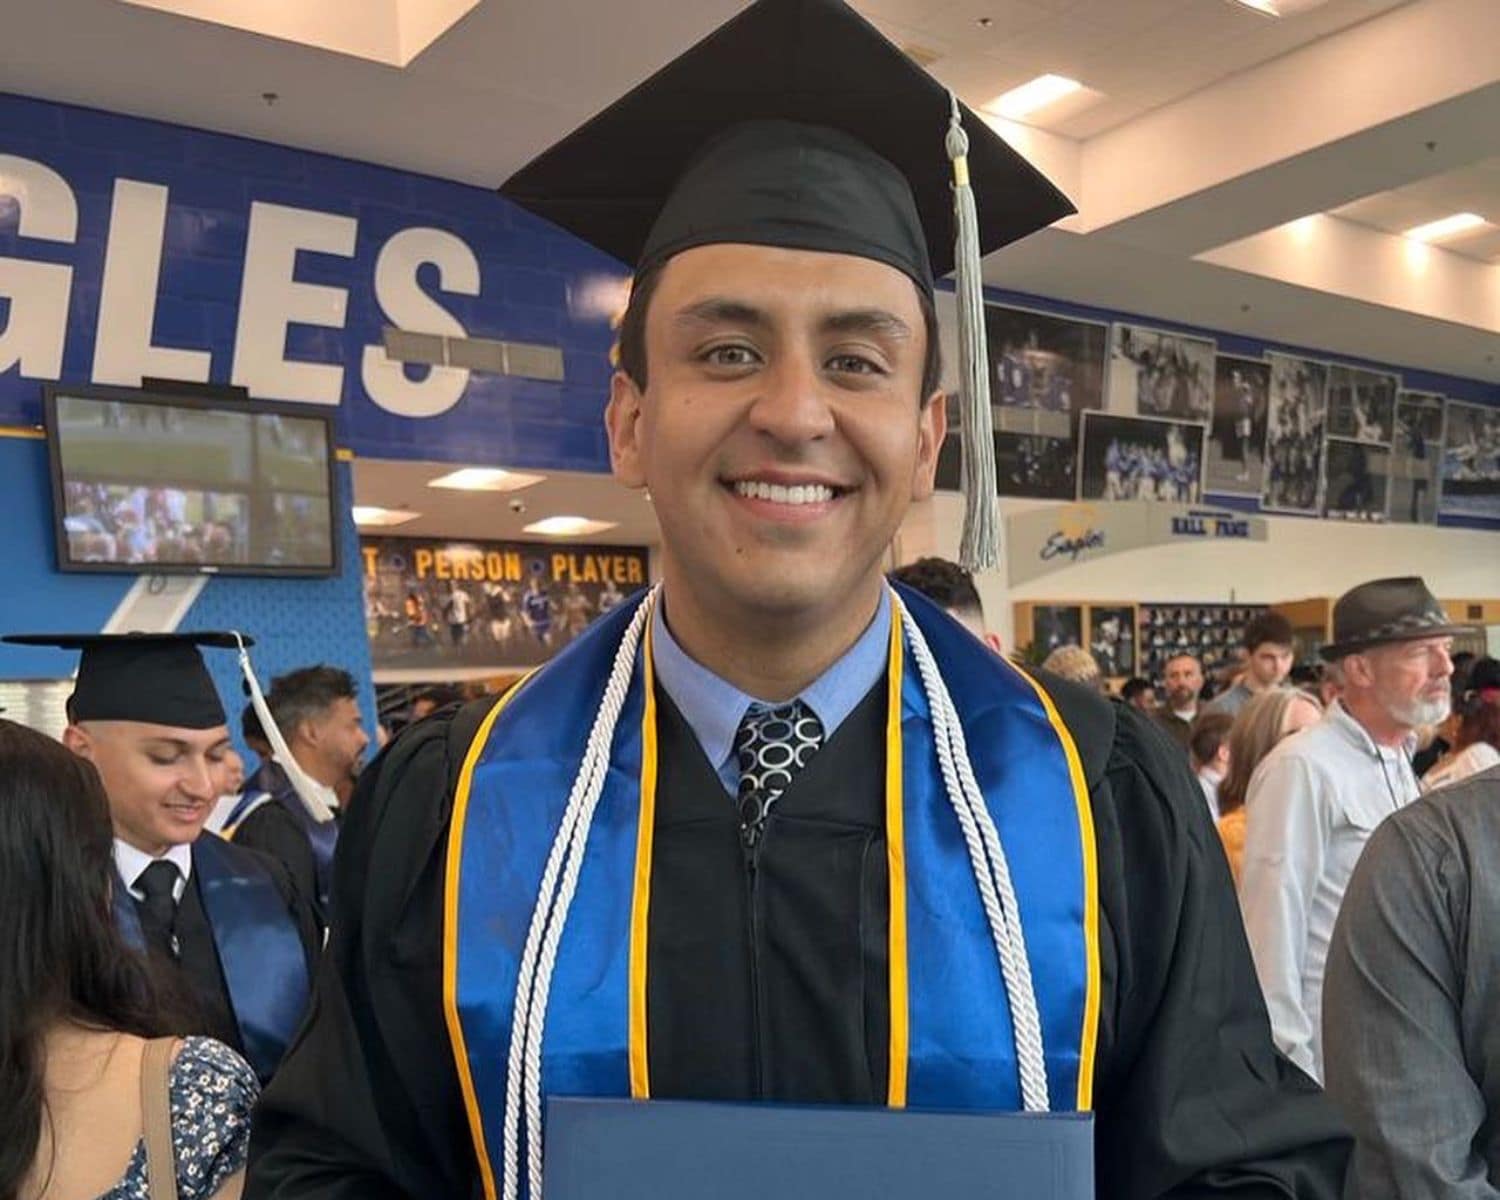 Juan Andres Mesa Sanchez proudly displays his Bachelor of Science in Aeronautics degree. (Photo: Juan Andres Mesa Sanchez)